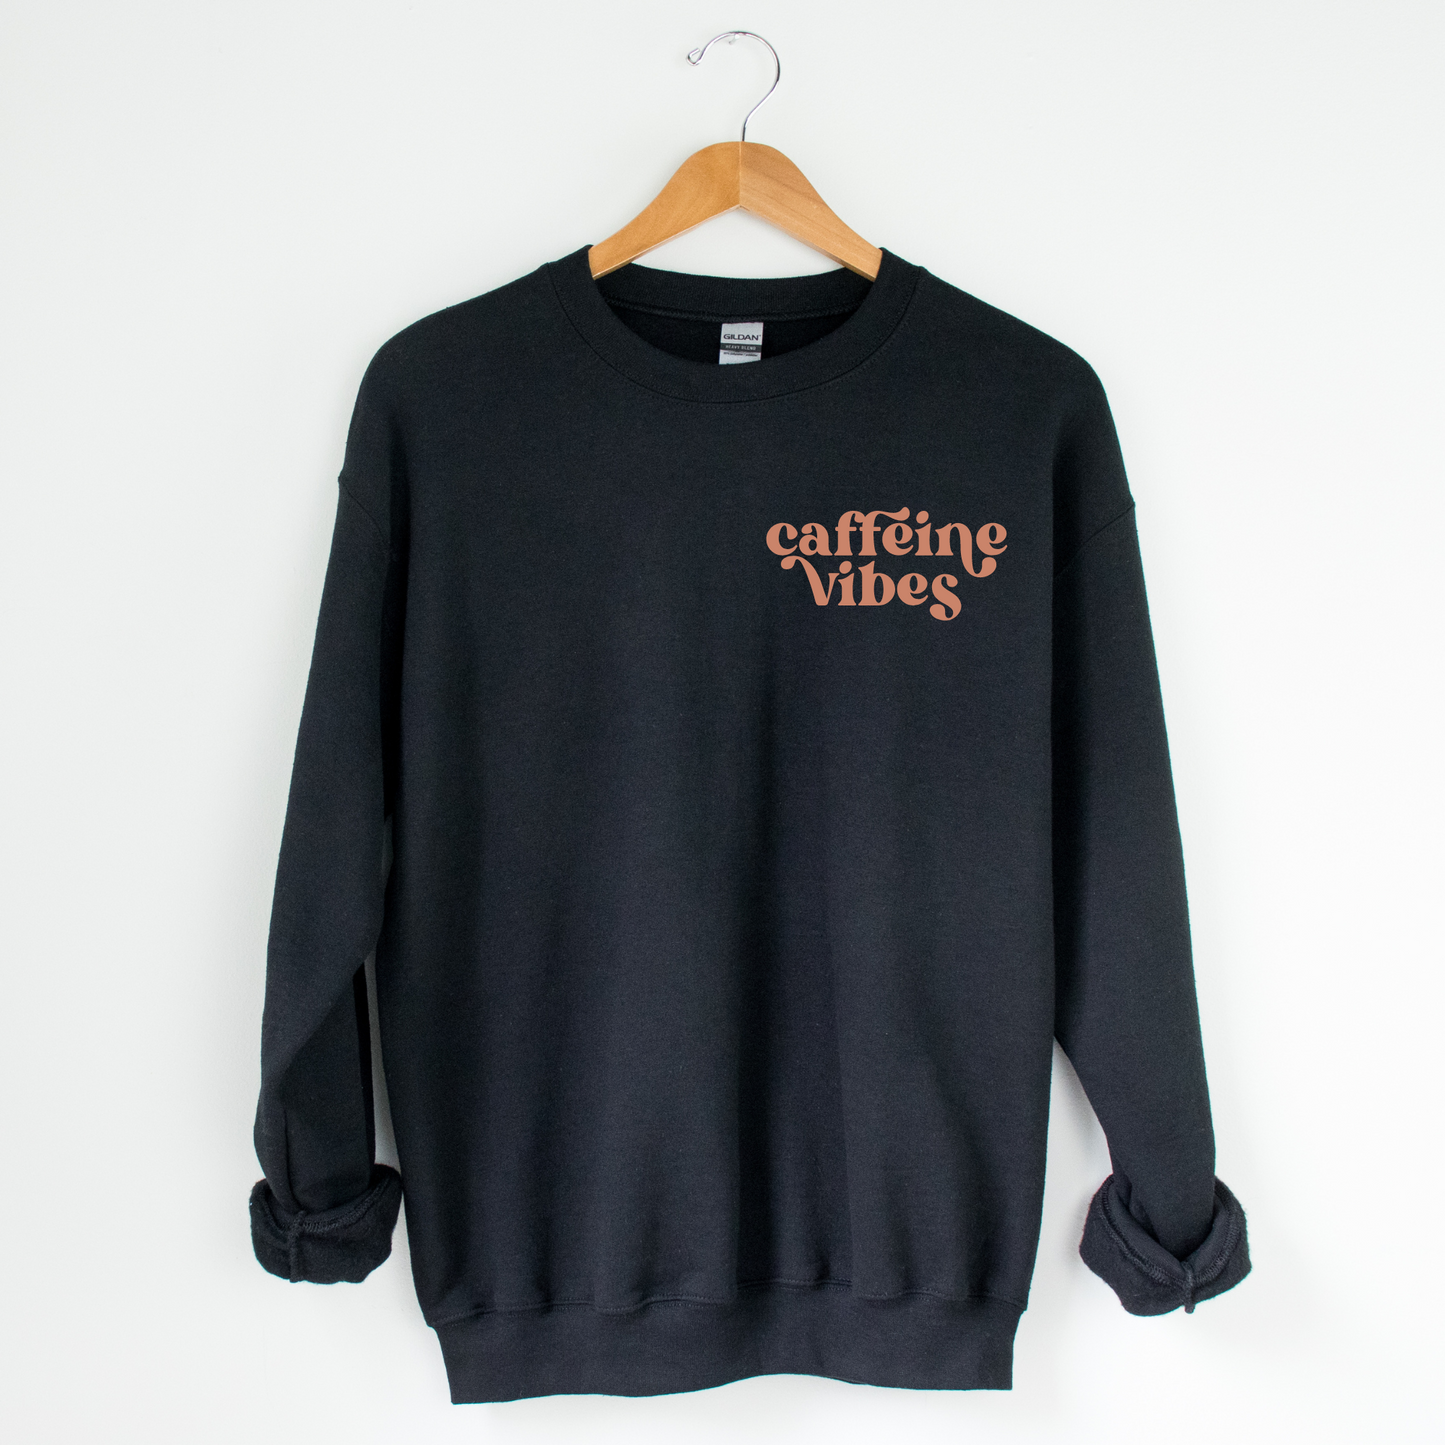 Caffeine Vibes Crew Neck Graphic Sweater